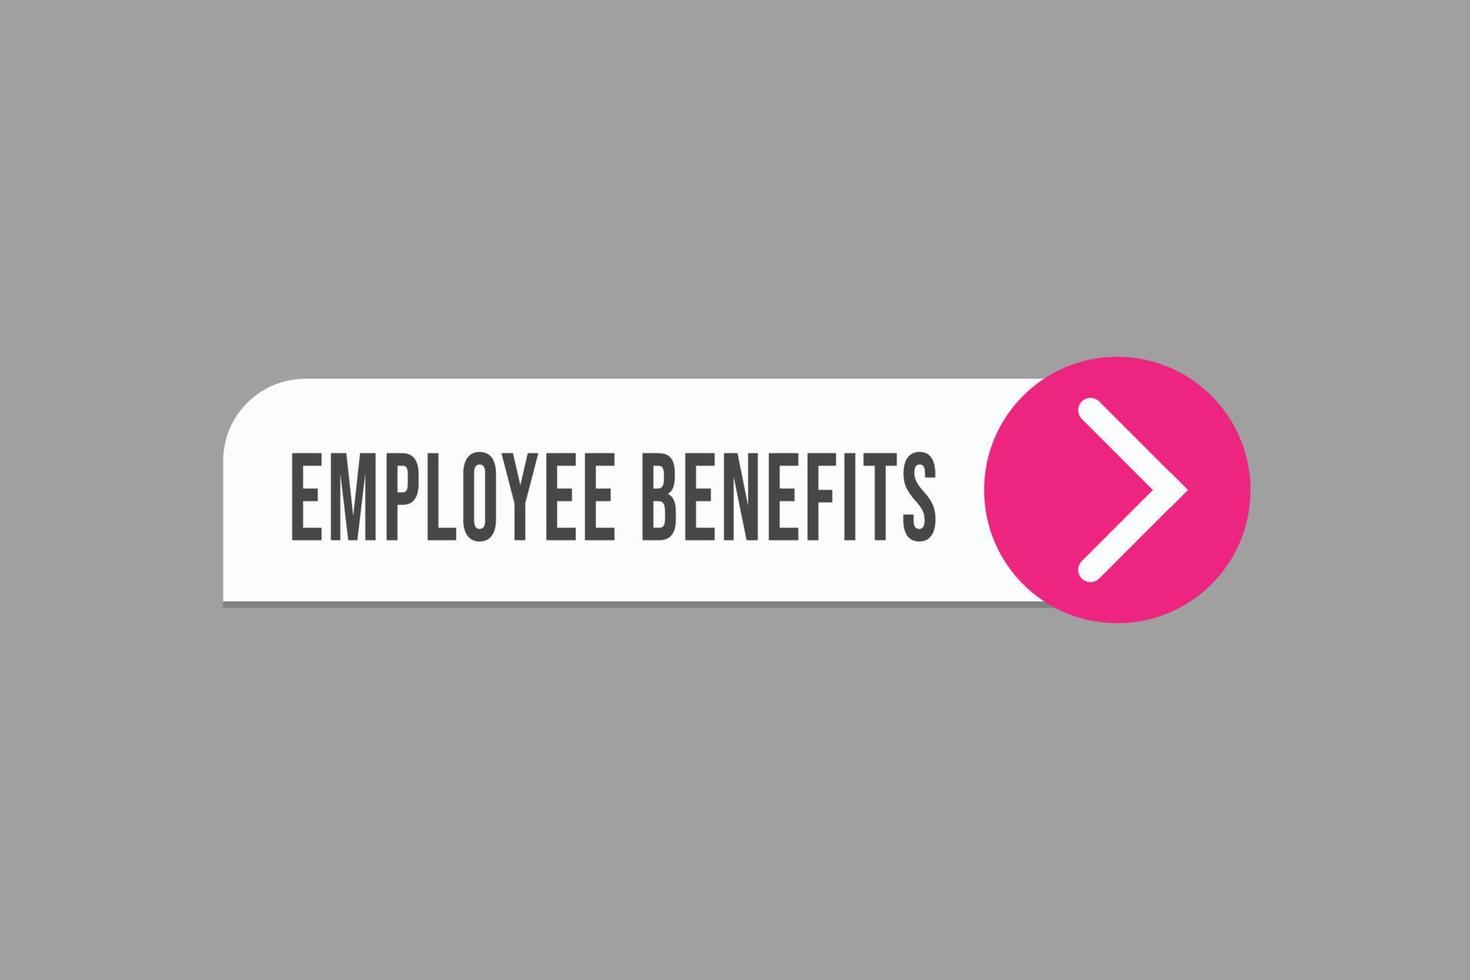 employee benefits button vectors. sign label speech bubble employee benefits vector